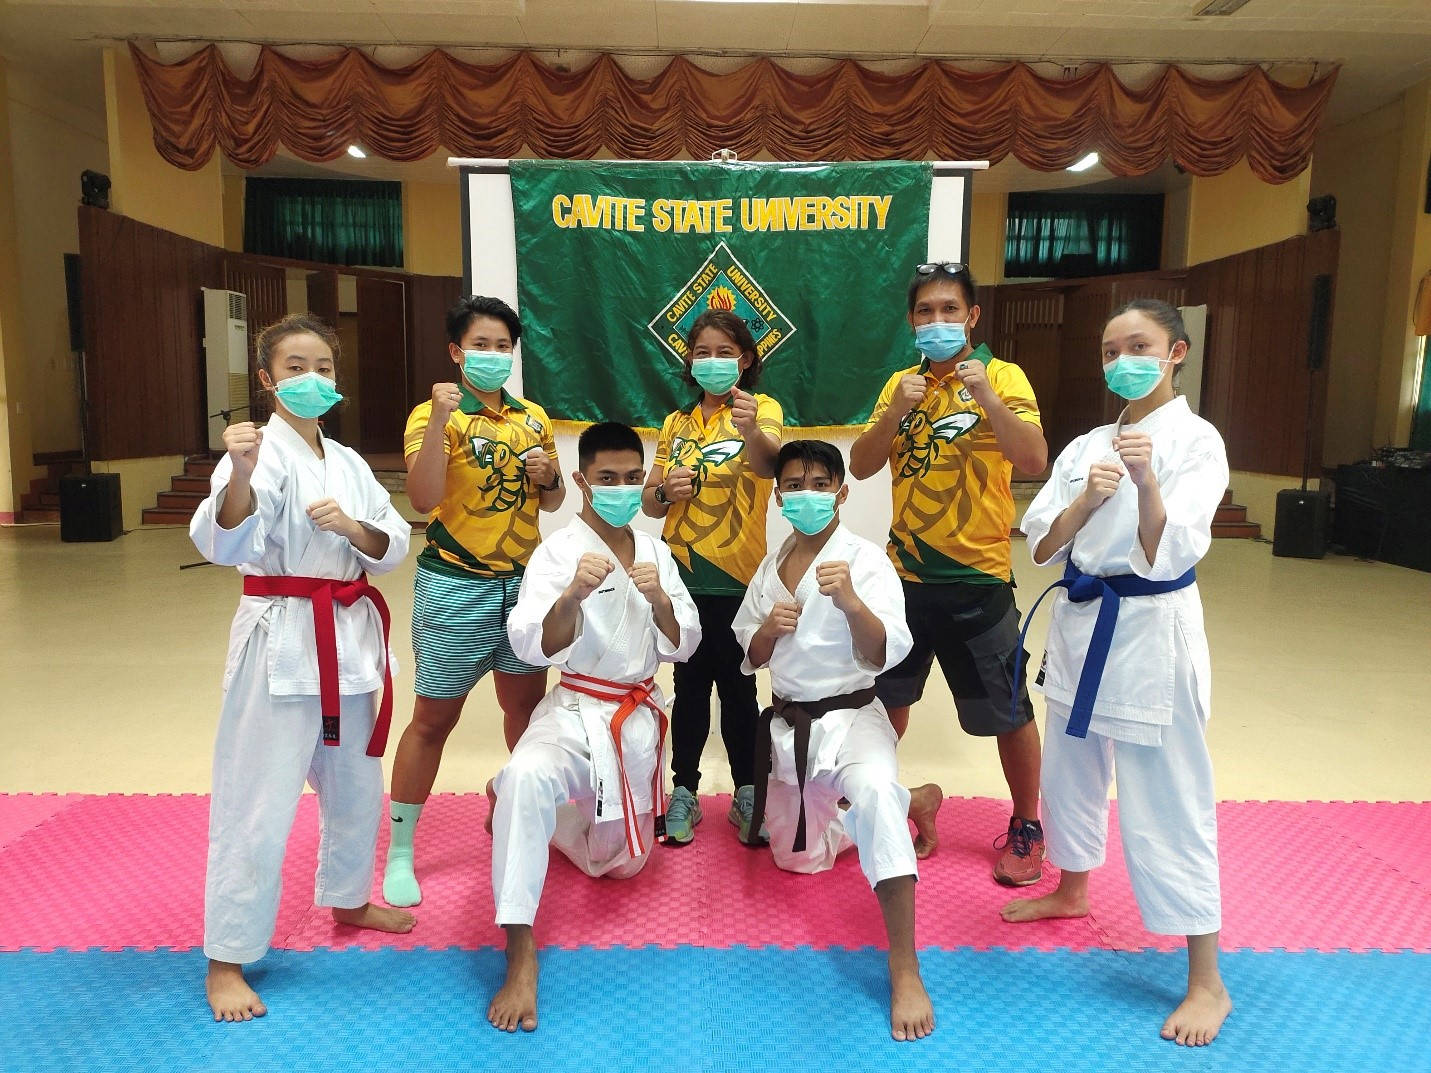 Karateeleveri Masker På Cavite State University. Wallpaper